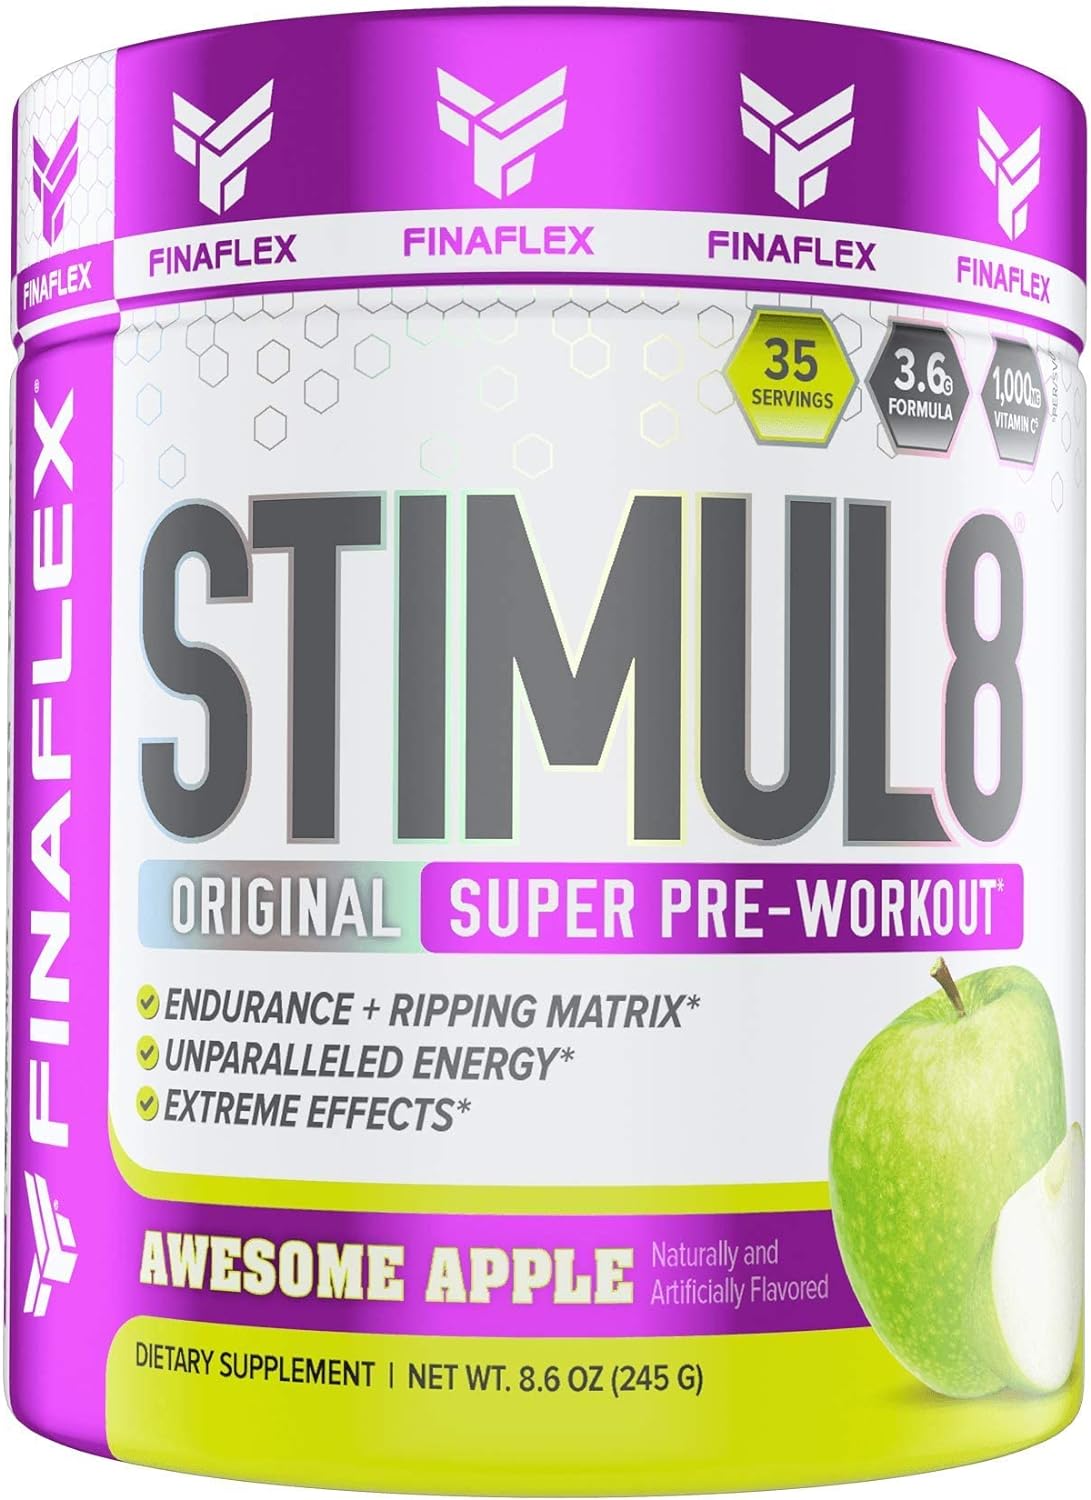 FINAFLEX STIMUL8 Original Super Pre-Workout, Awesome Apple - Energy, S